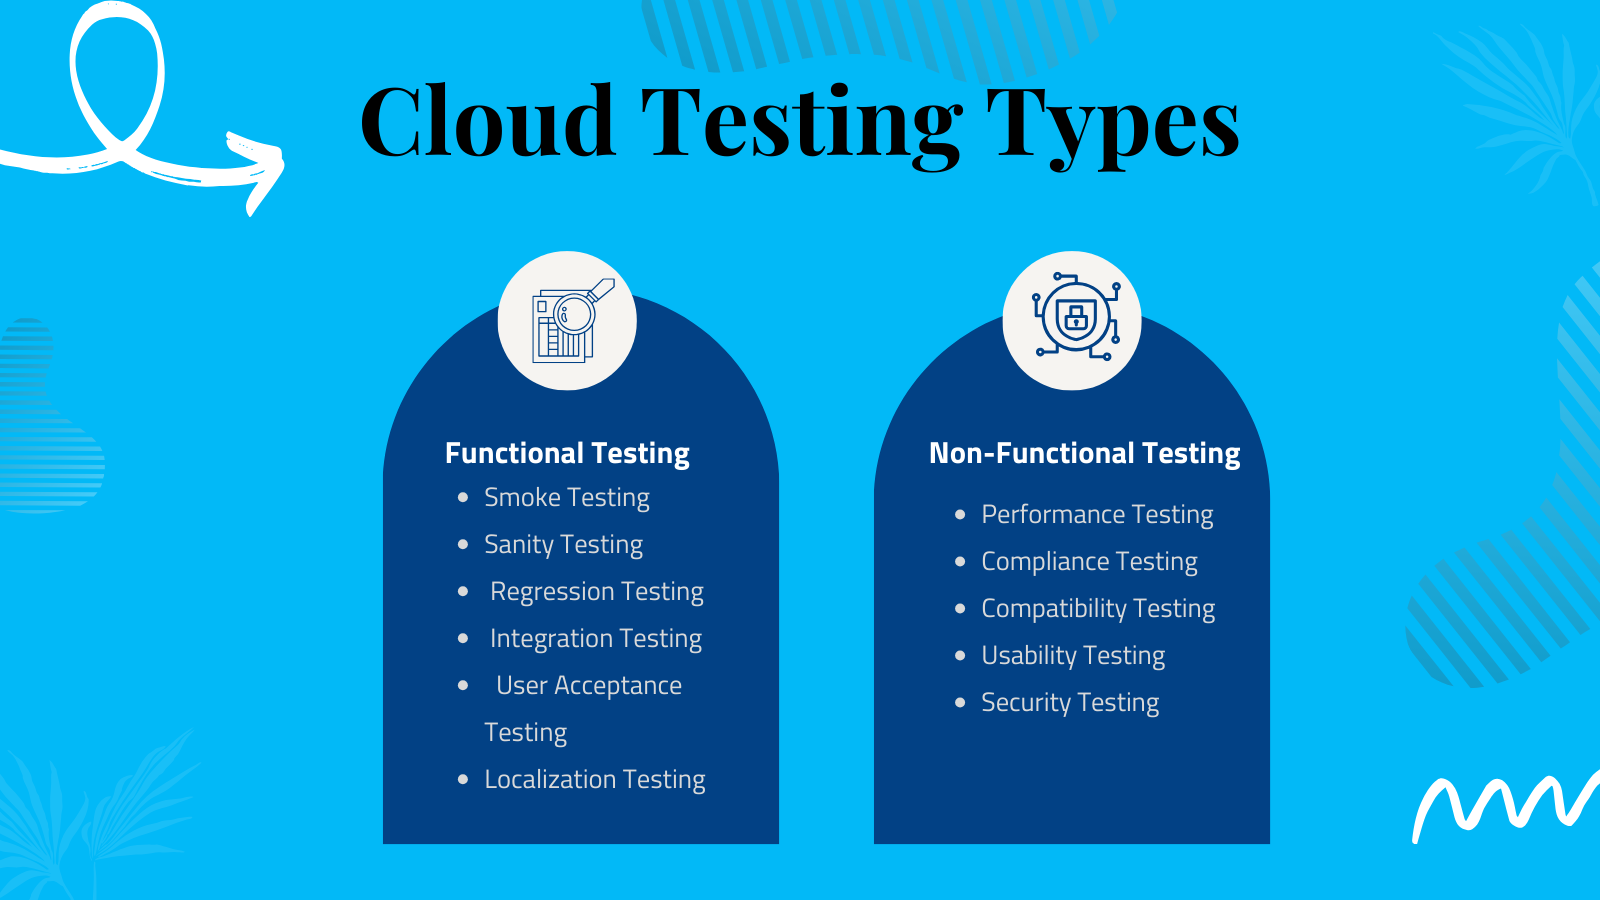 Cloud testing types